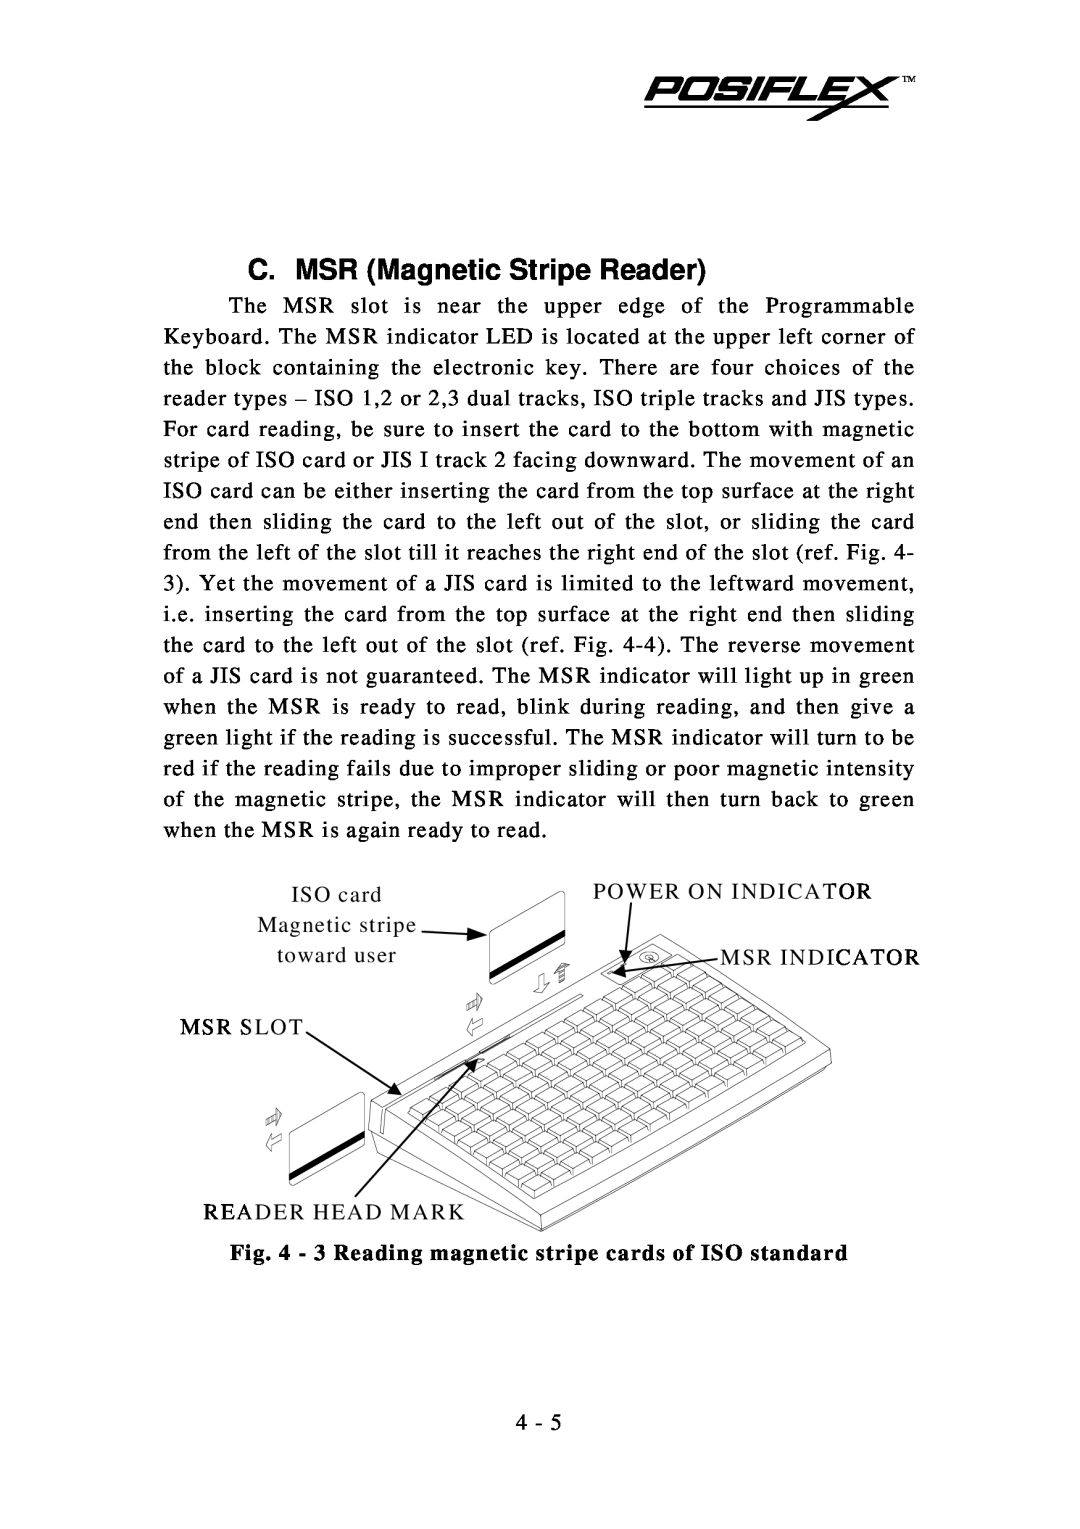 Mustek KB3100 user manual C. MSR Magnetic Stripe Reader, 3 Reading magnetic stripe cards of ISO standard 